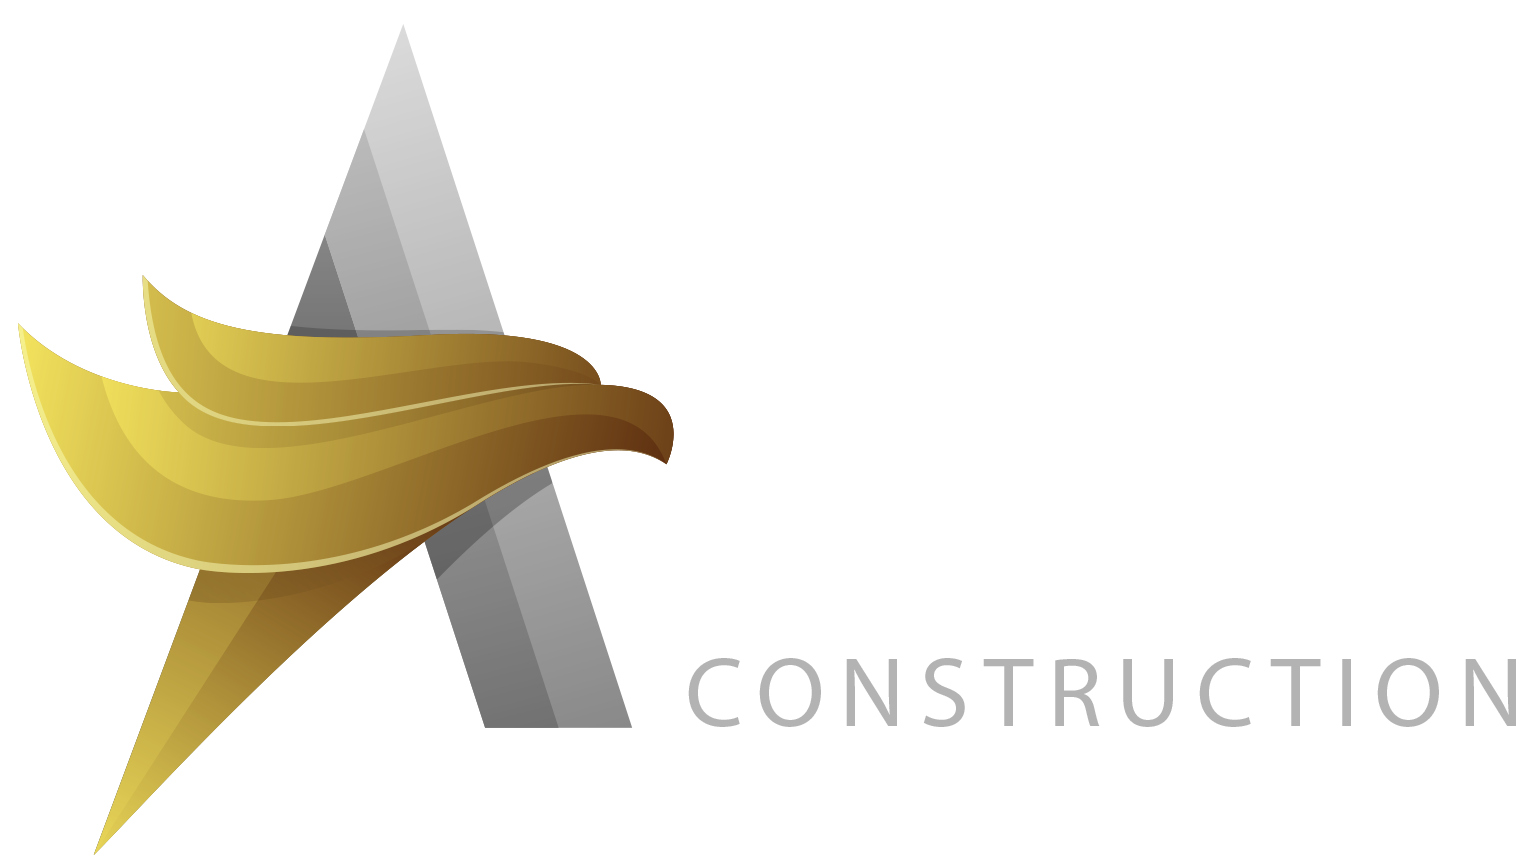 ASR Construction